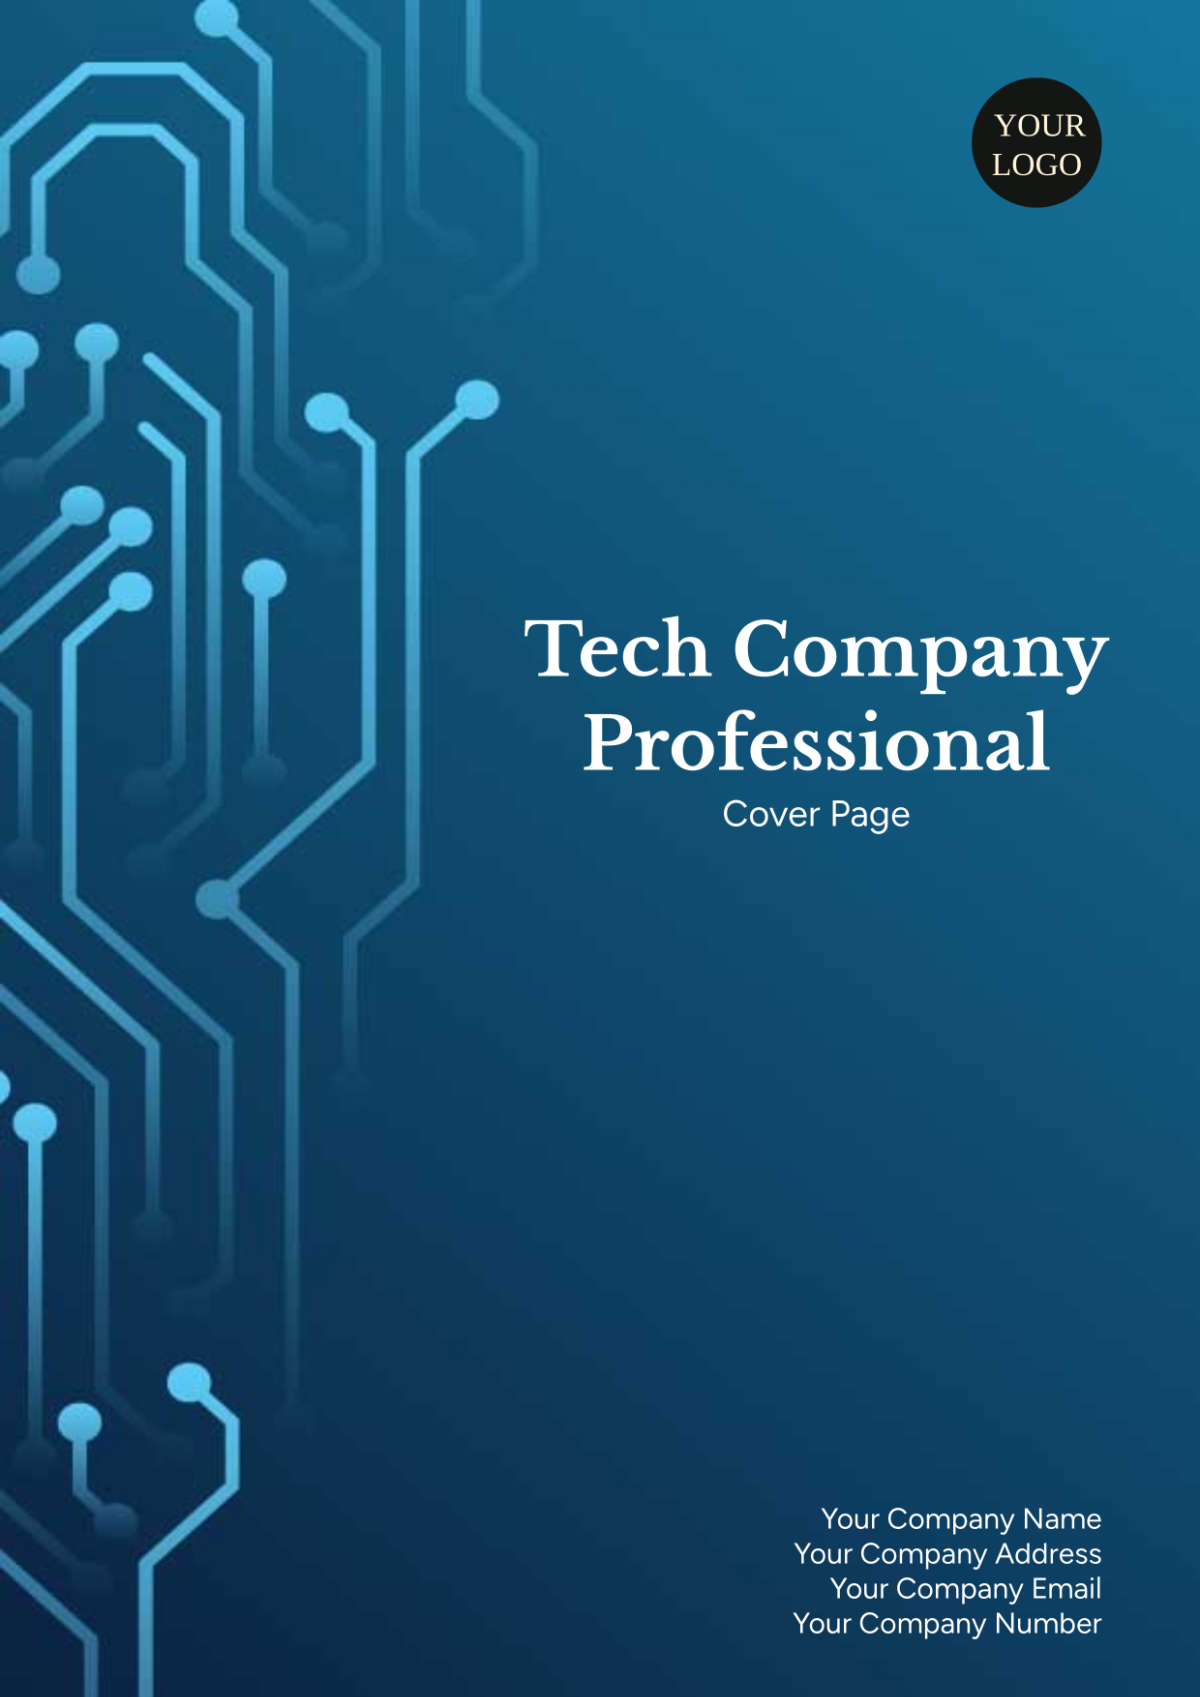 Tech Company Professional Cover Page